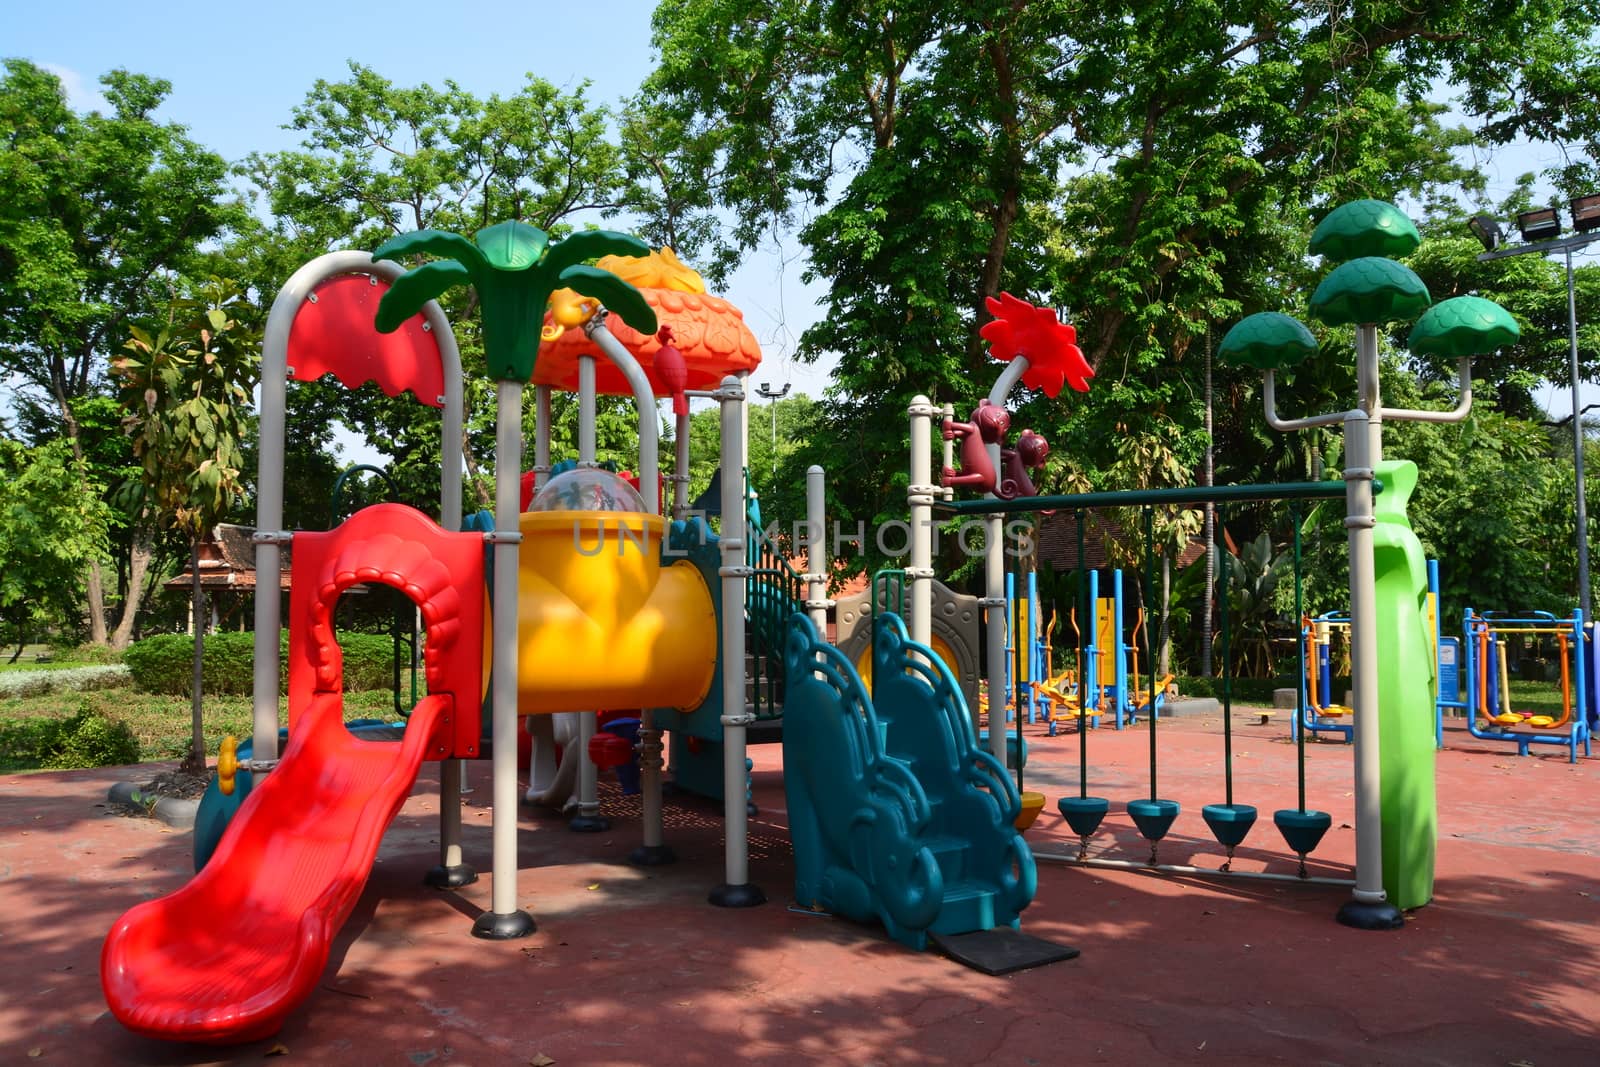 Children's playground in a city park, Playground for children. by ideation90